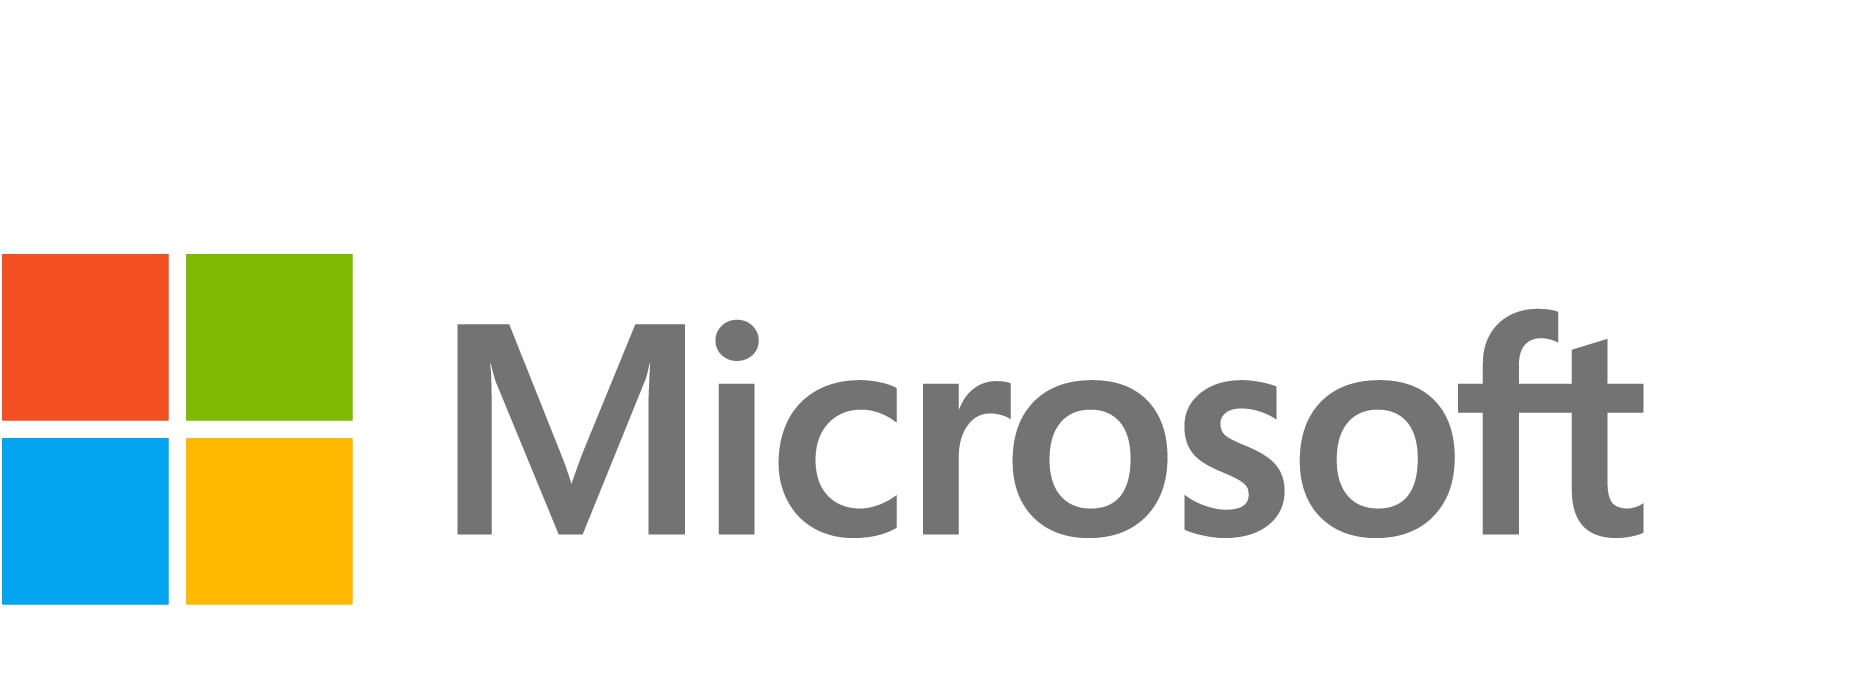 Microsoft Dynamics 365 for Sales, Enterprise edition - subscription license (1 month) - 1 device